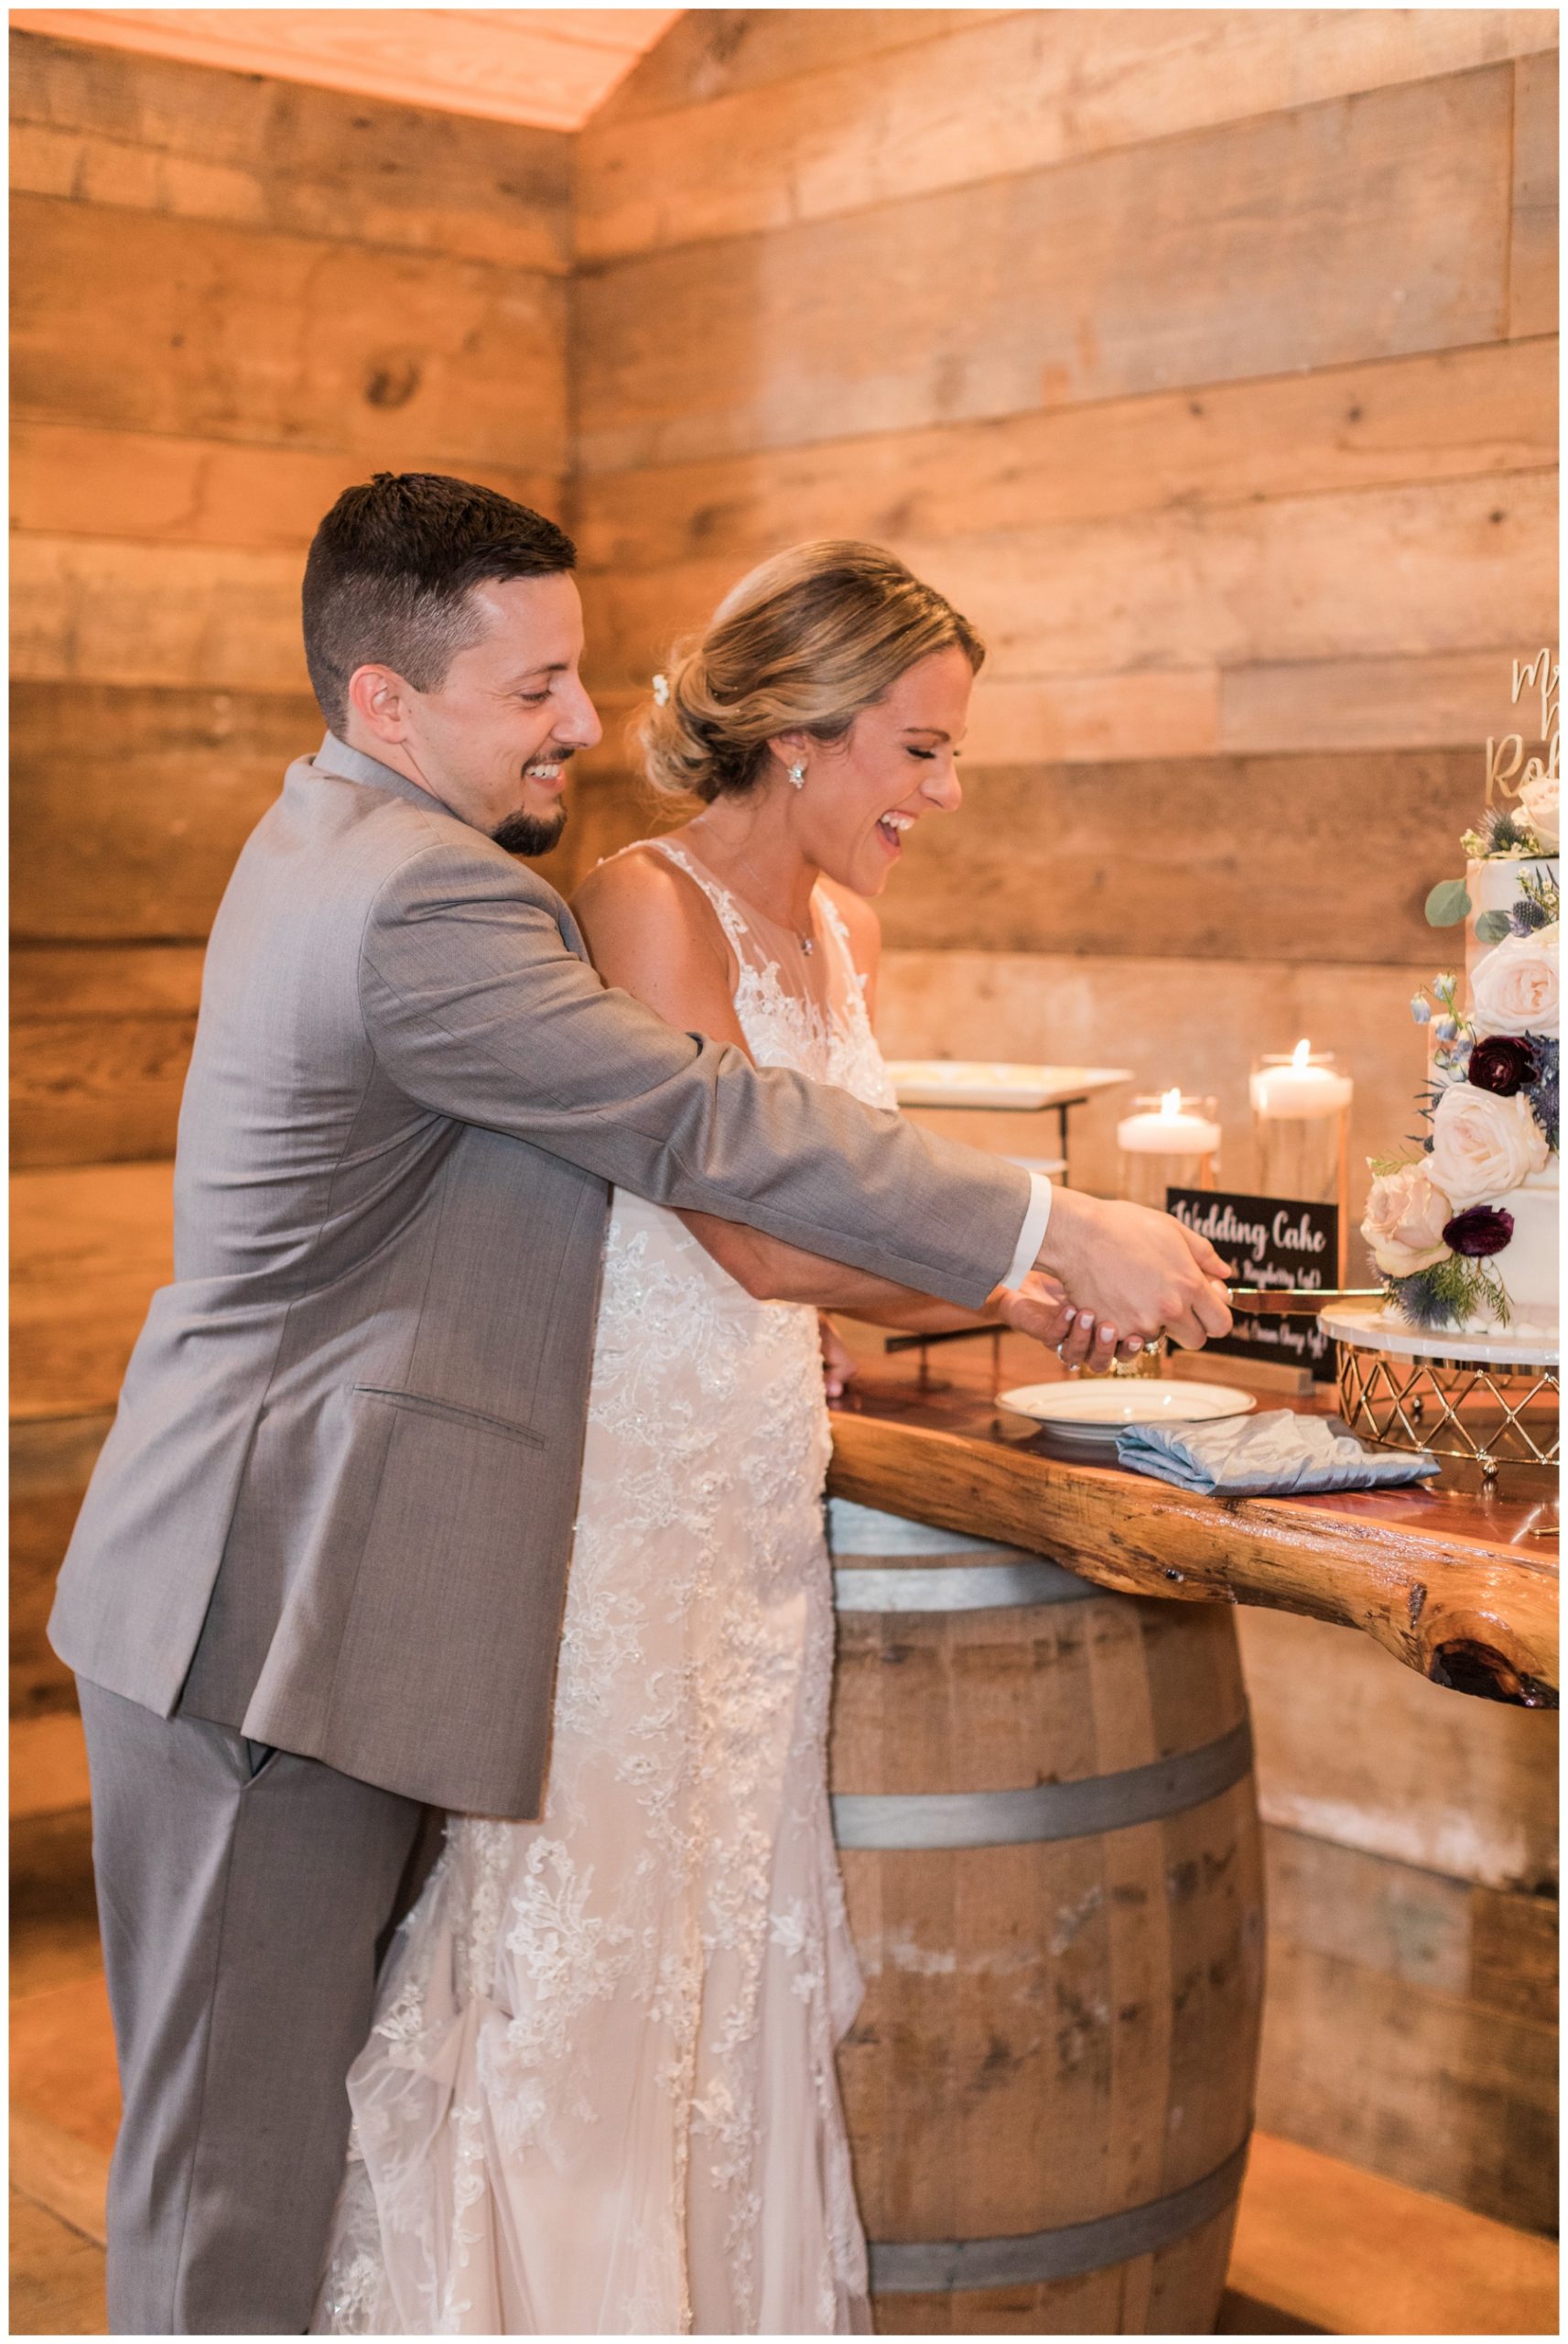 Wedding reception at The Vine in The Barrel Barn